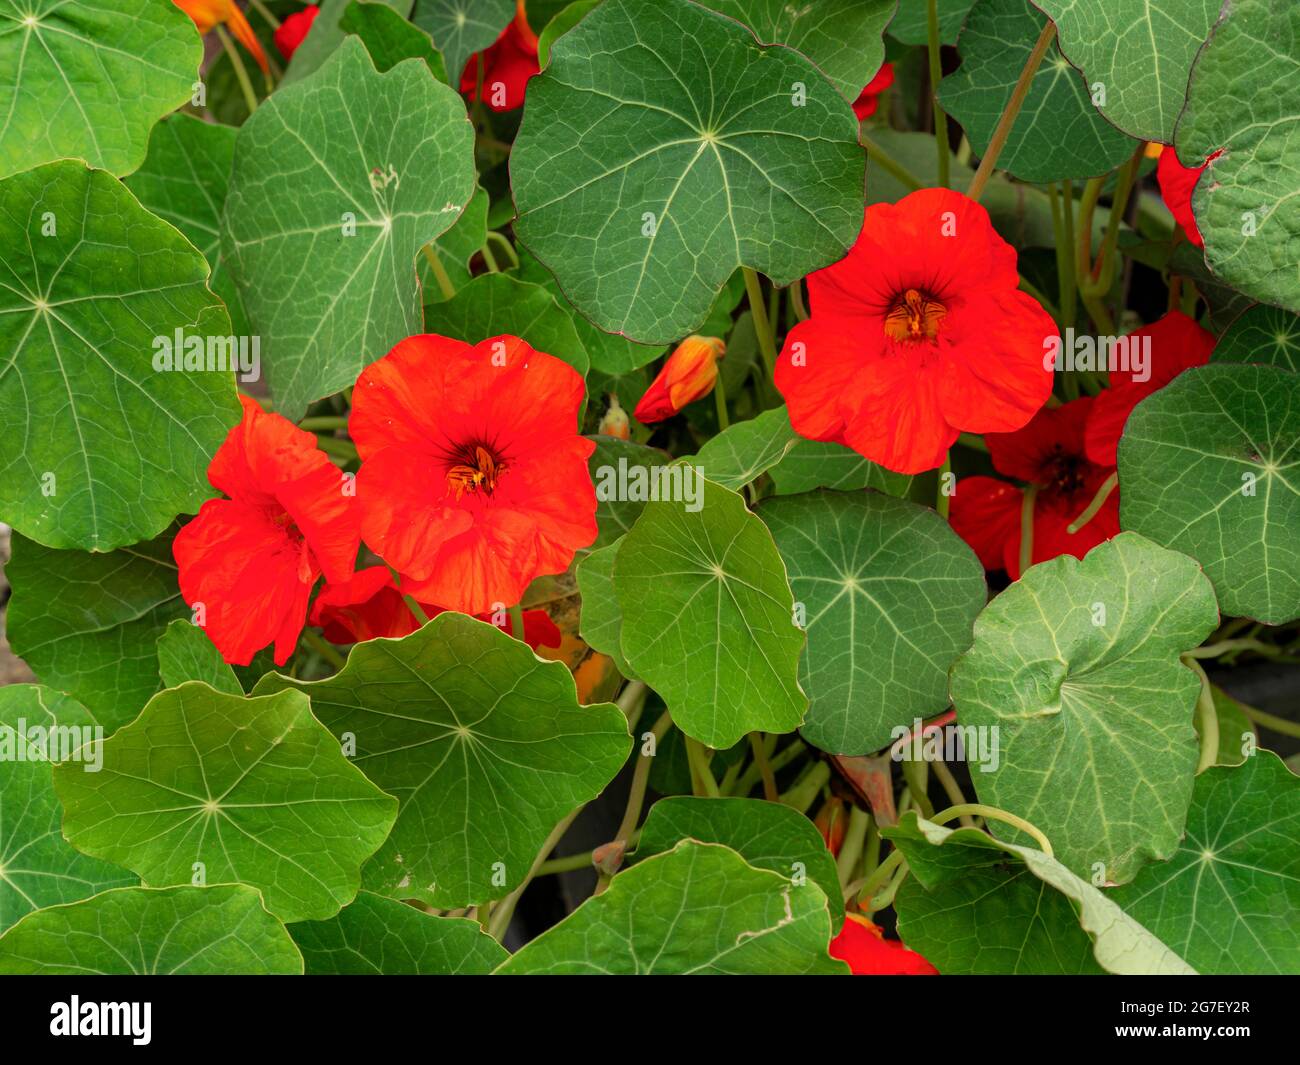 Nasturtium flowers and leaves, variety Empress of India Stock Photo